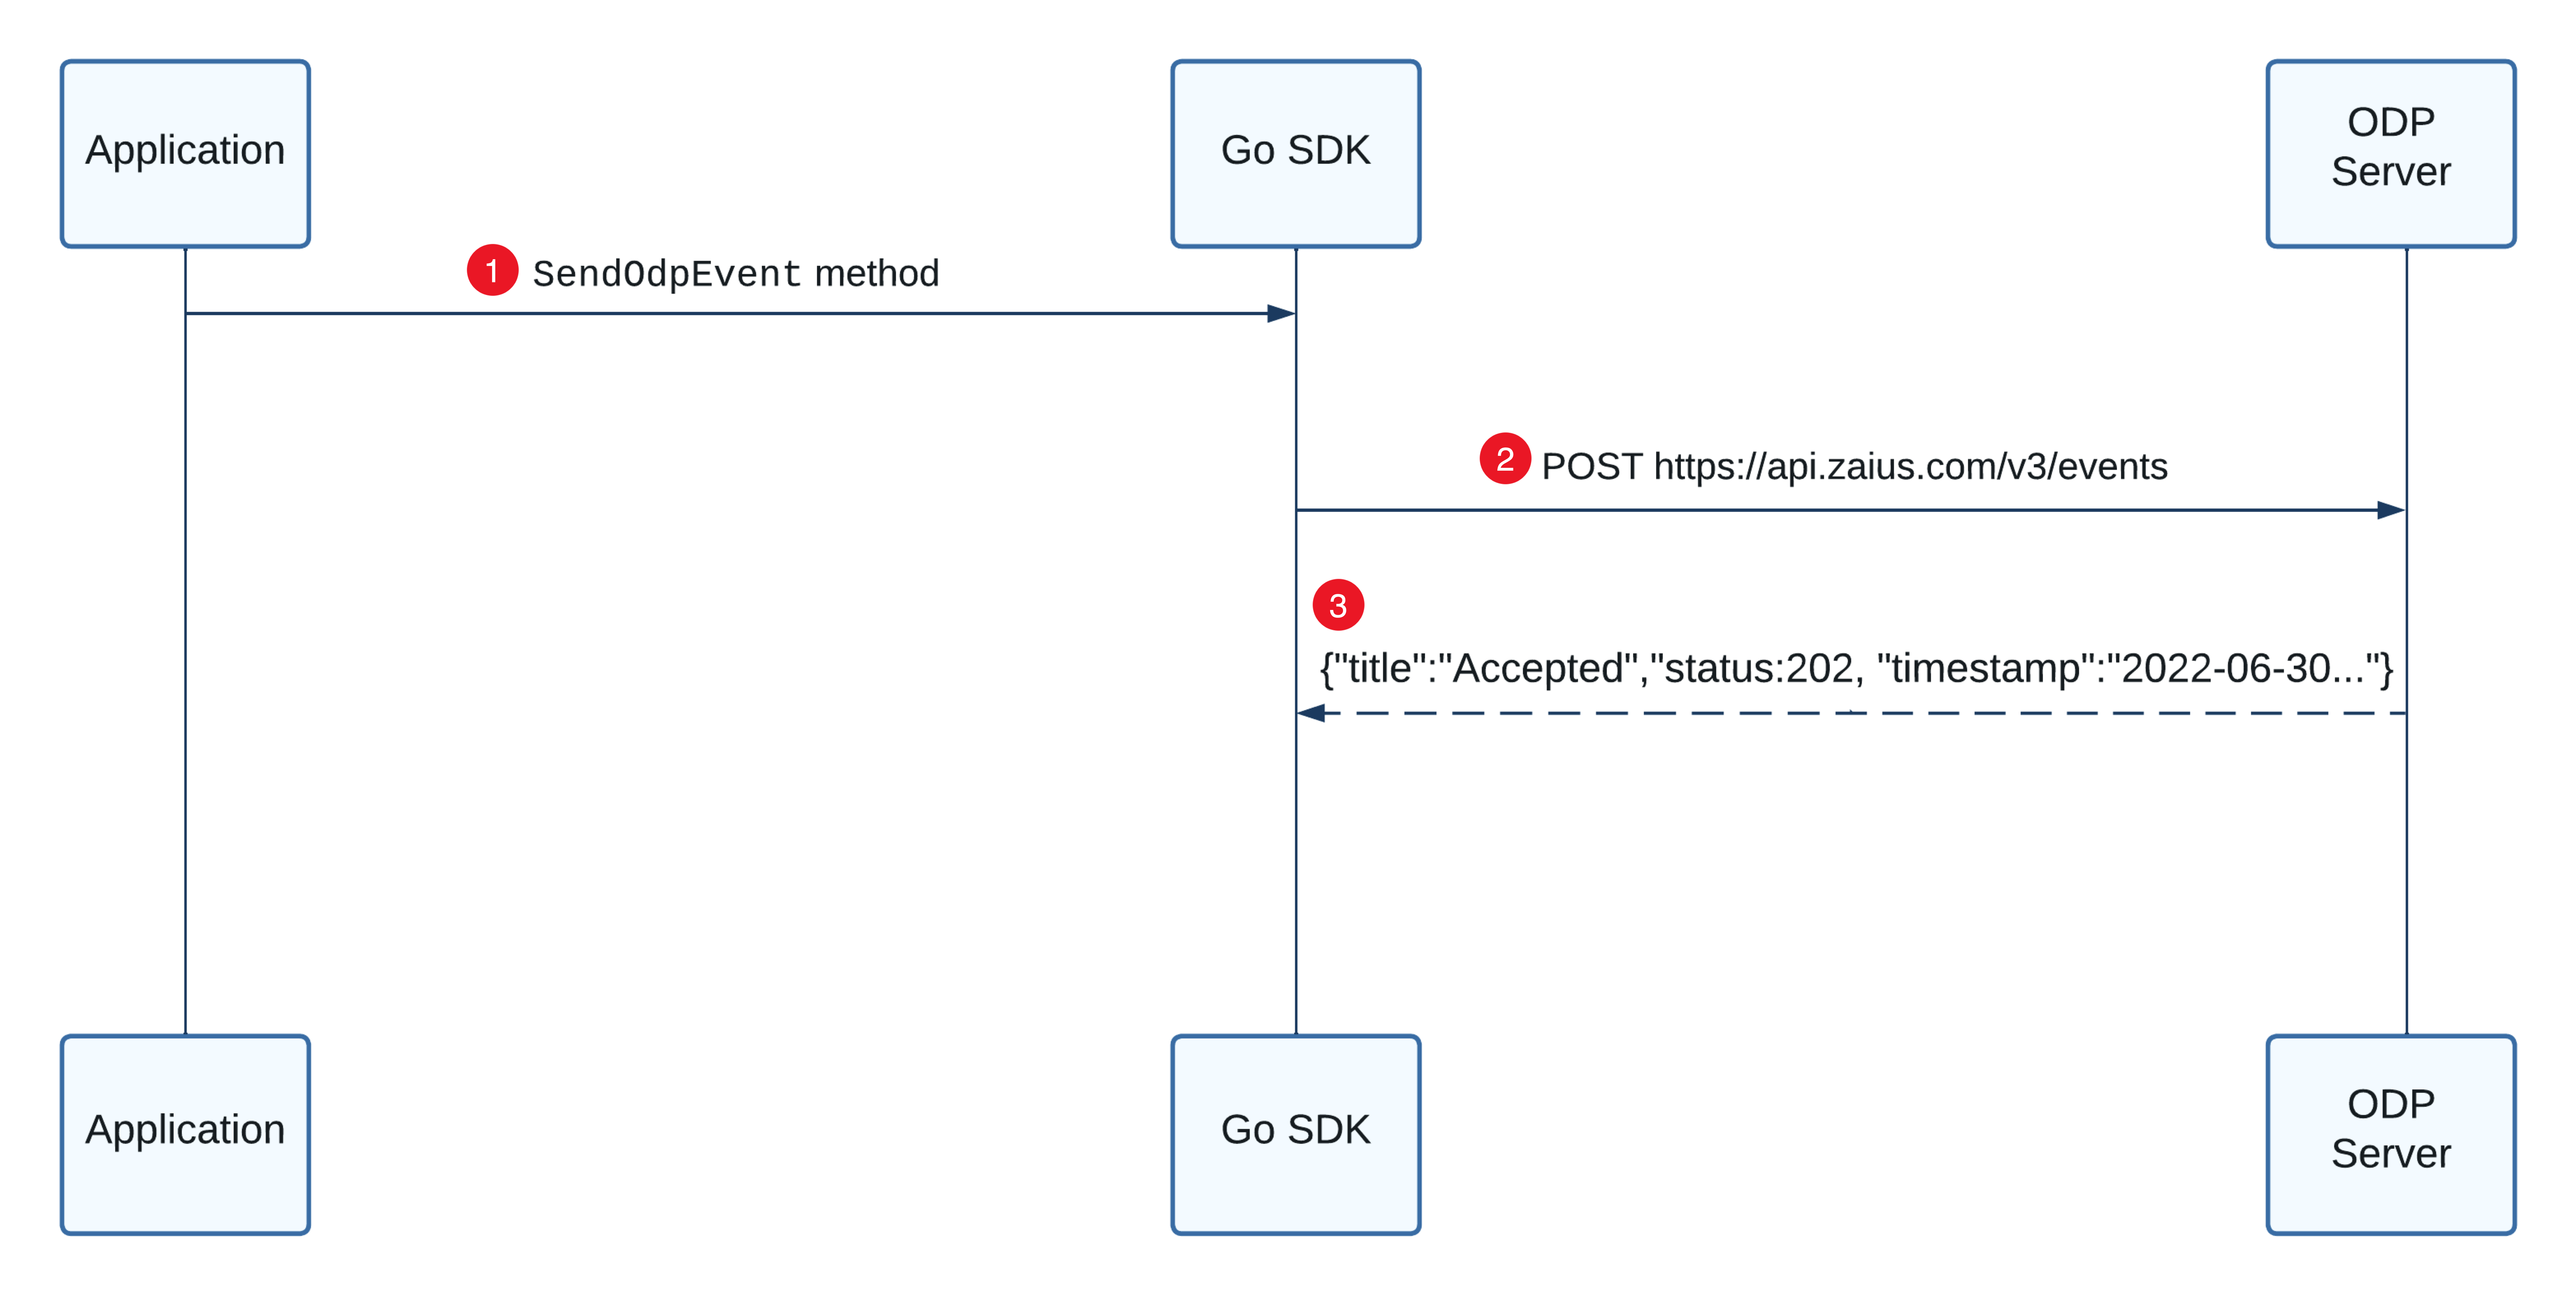 Go SDK network diagram to ODP